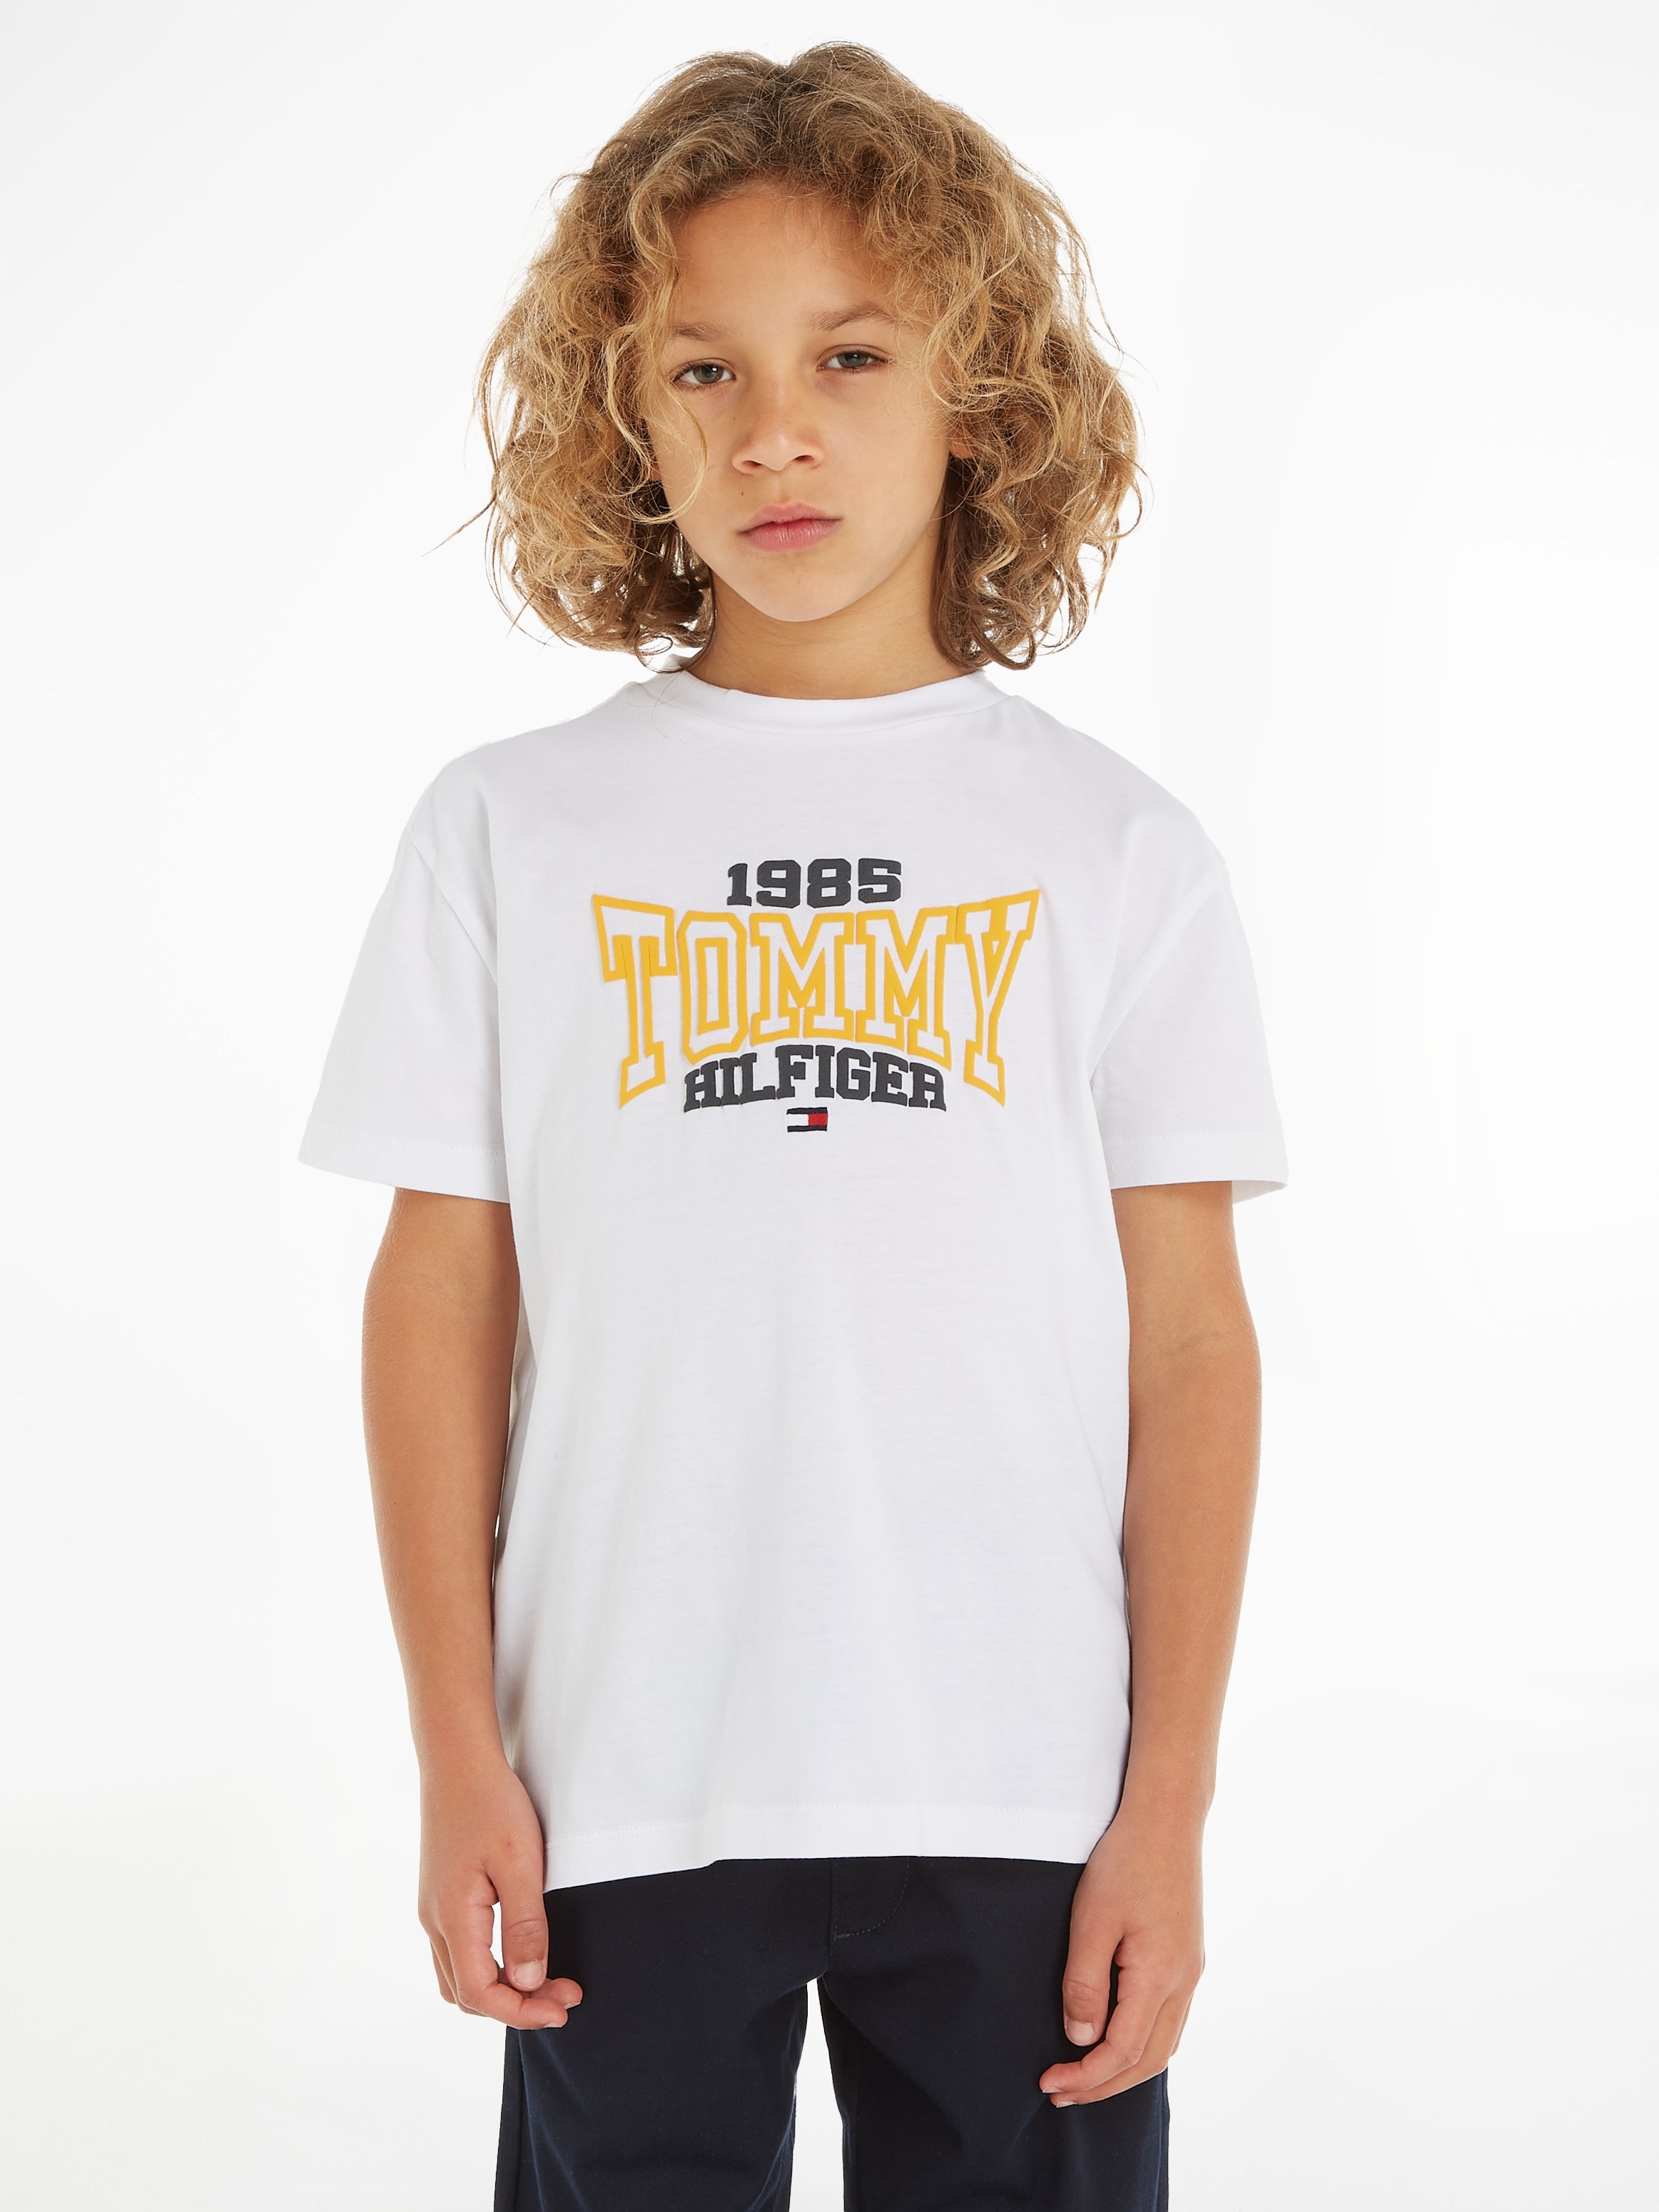 Tommy Hilfiger T-Shirt Tommy 1985 »TOMMY Varsity modischem mit S/S«, bei Print TEE 1985 Hilfgier VARSITY